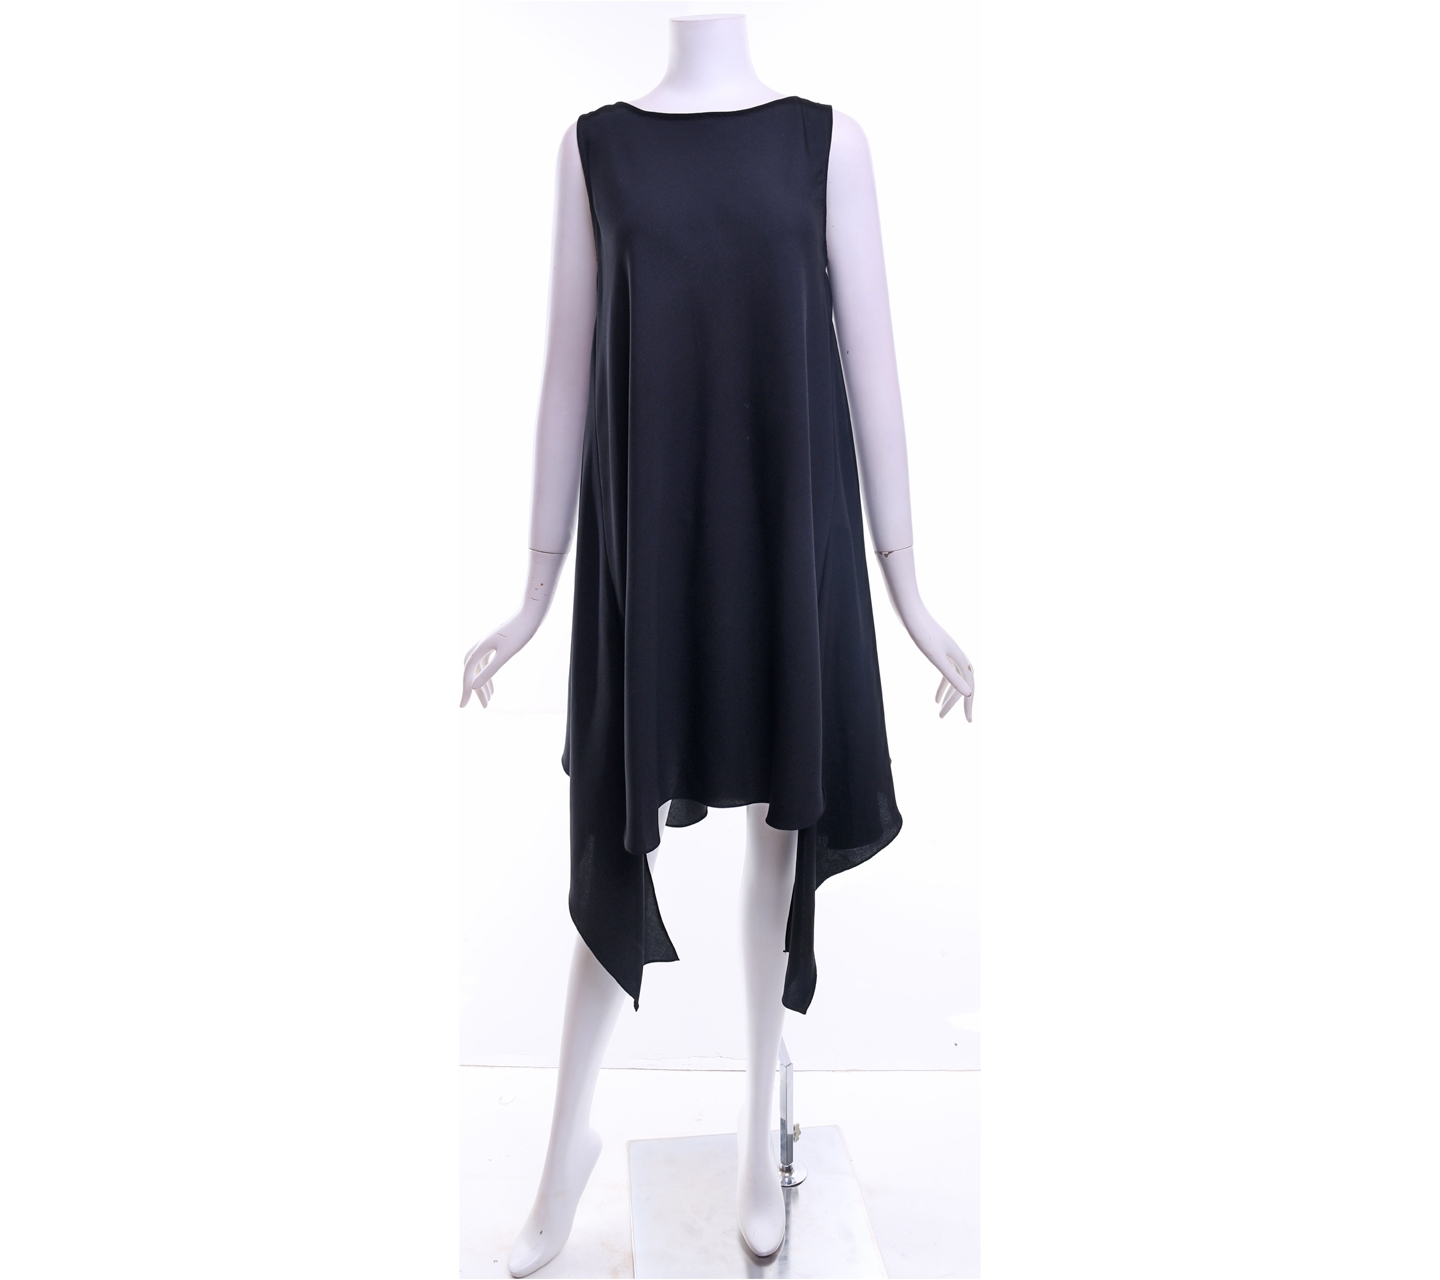 Shop At Shopee Black Asymmetrical Mini Dress